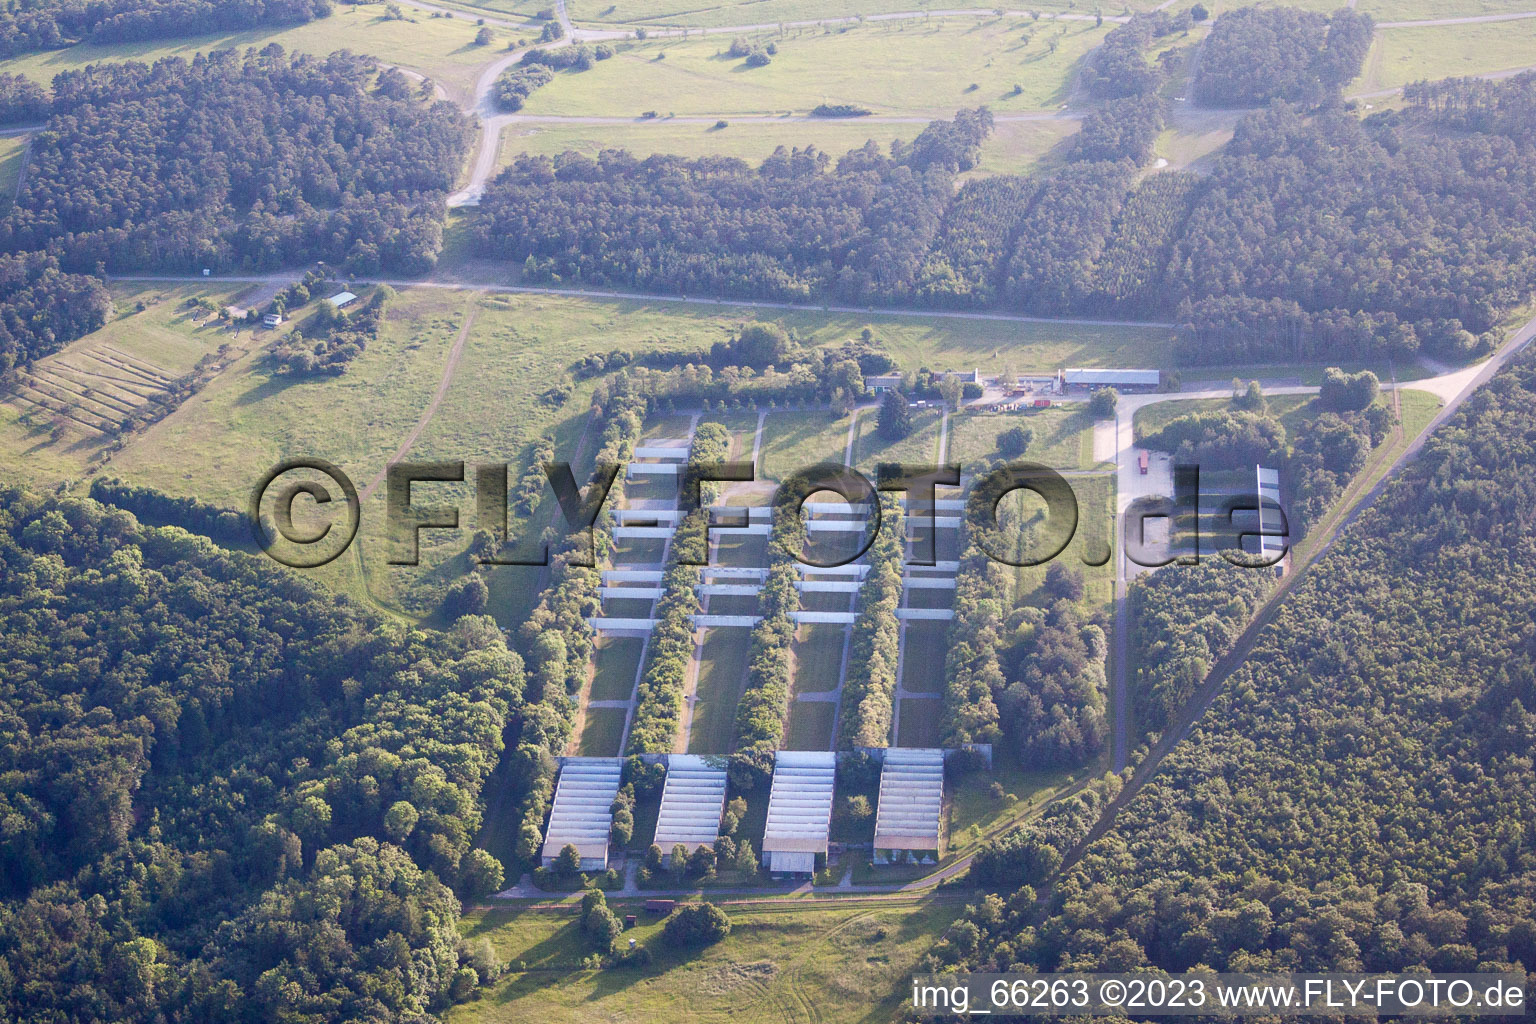 Aerial view of Shooting range in Hardheim in the state Baden-Wuerttemberg, Germany